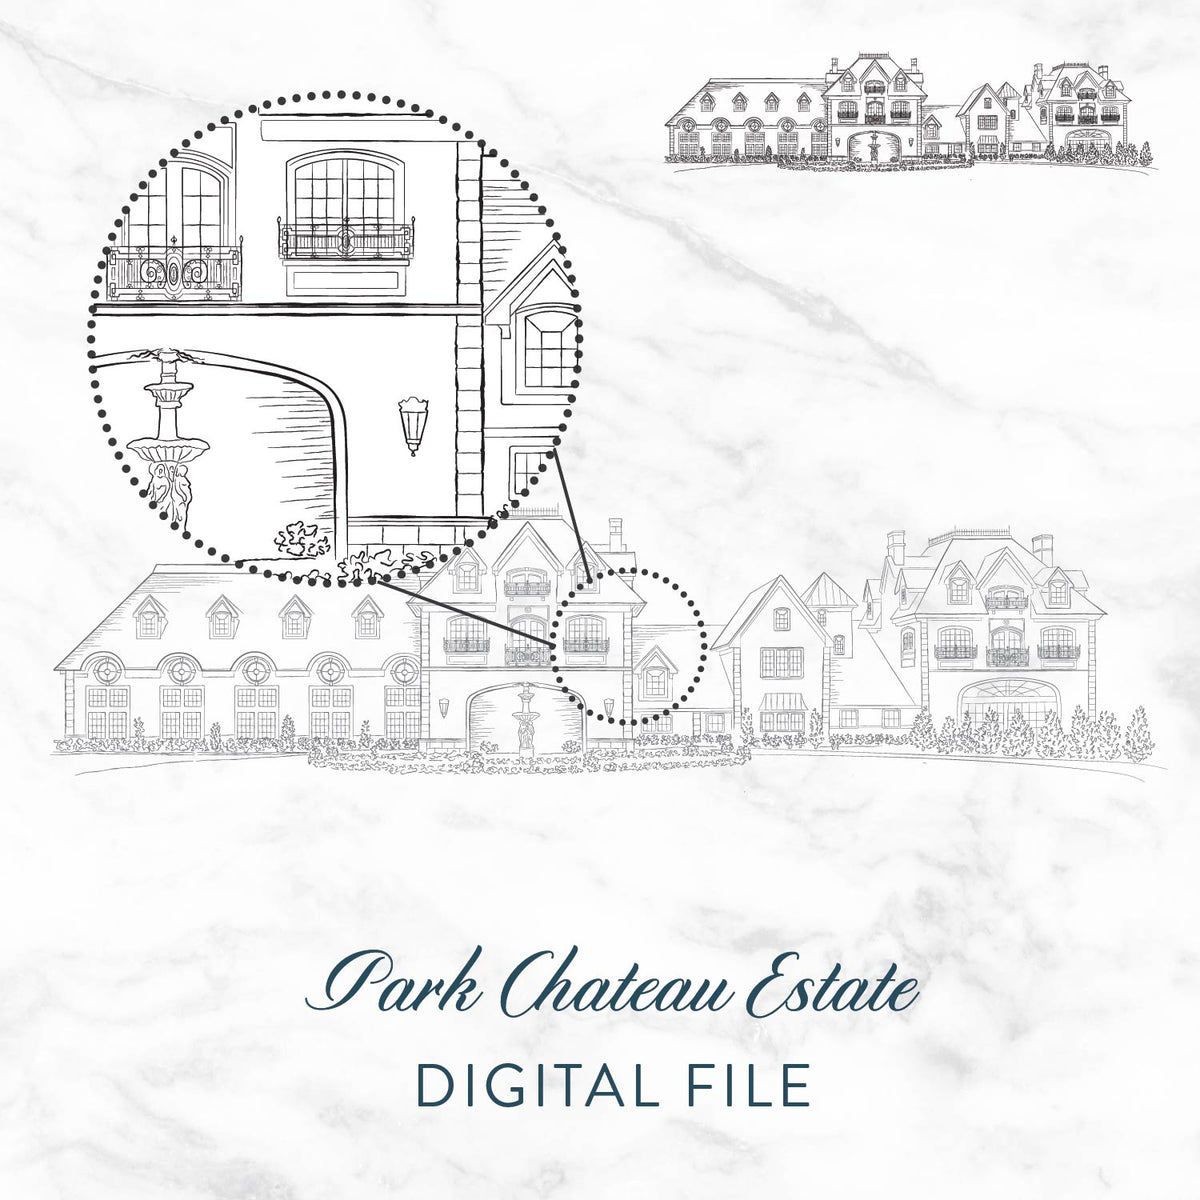 Park Chateau Estate Sketch Digital File